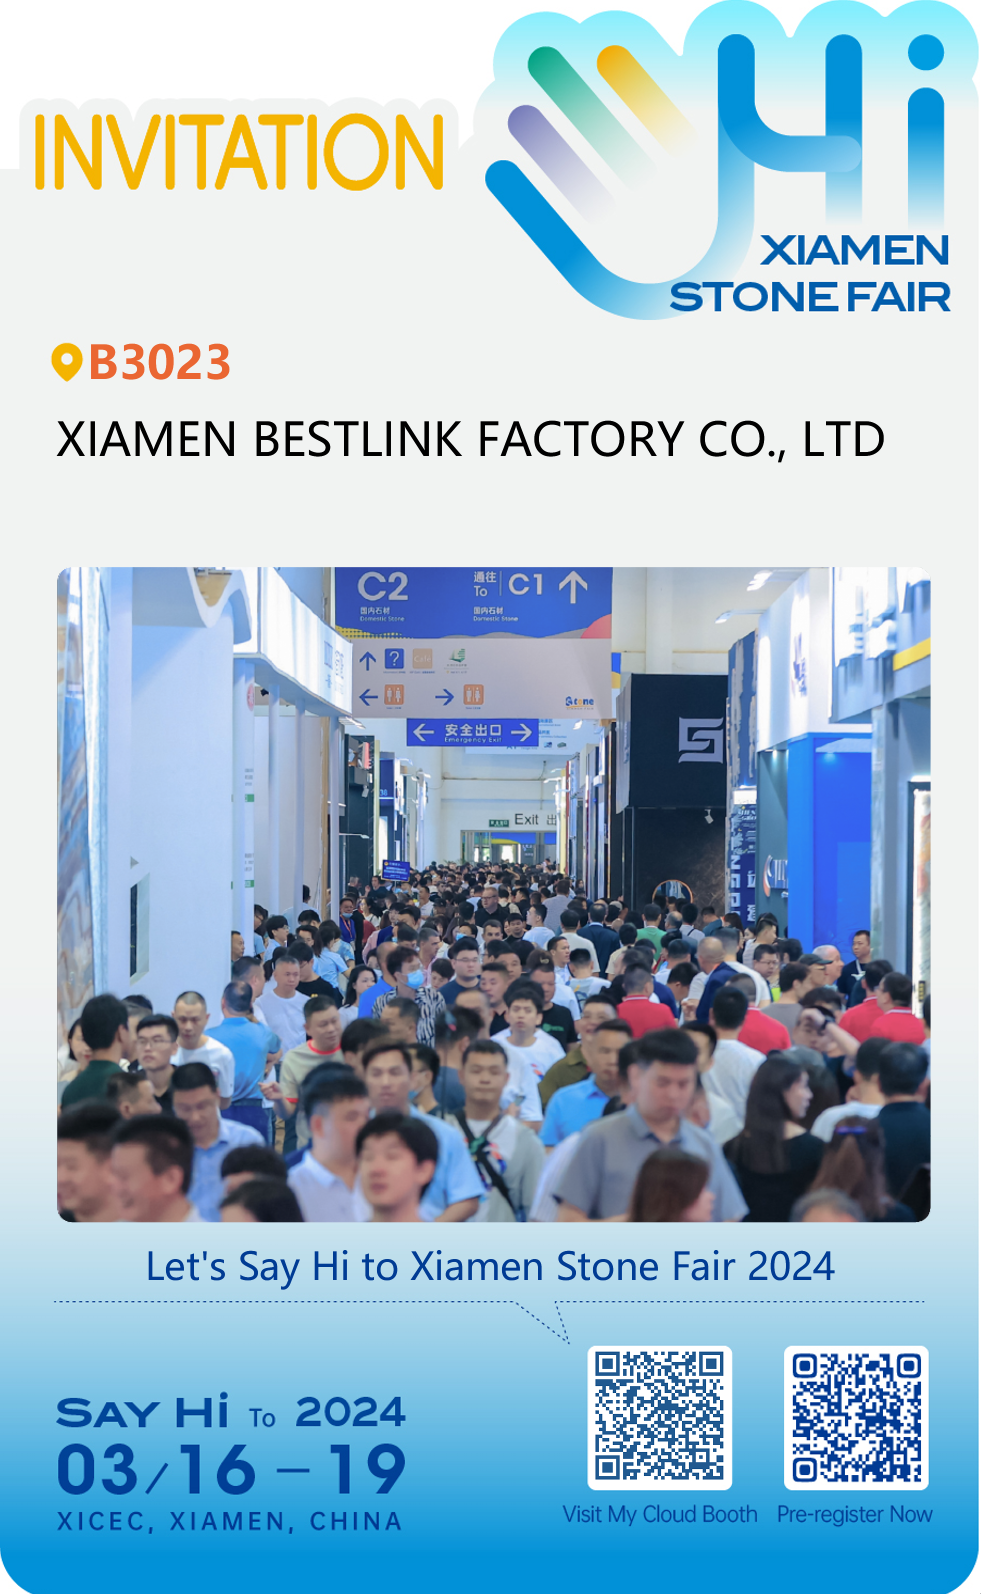 WELCOME TO B3023 Xiamen Bestlink Factory Co., Ltd. THE 24TH CHINA XIAMEN INTERNATIONAL STONE FAIR